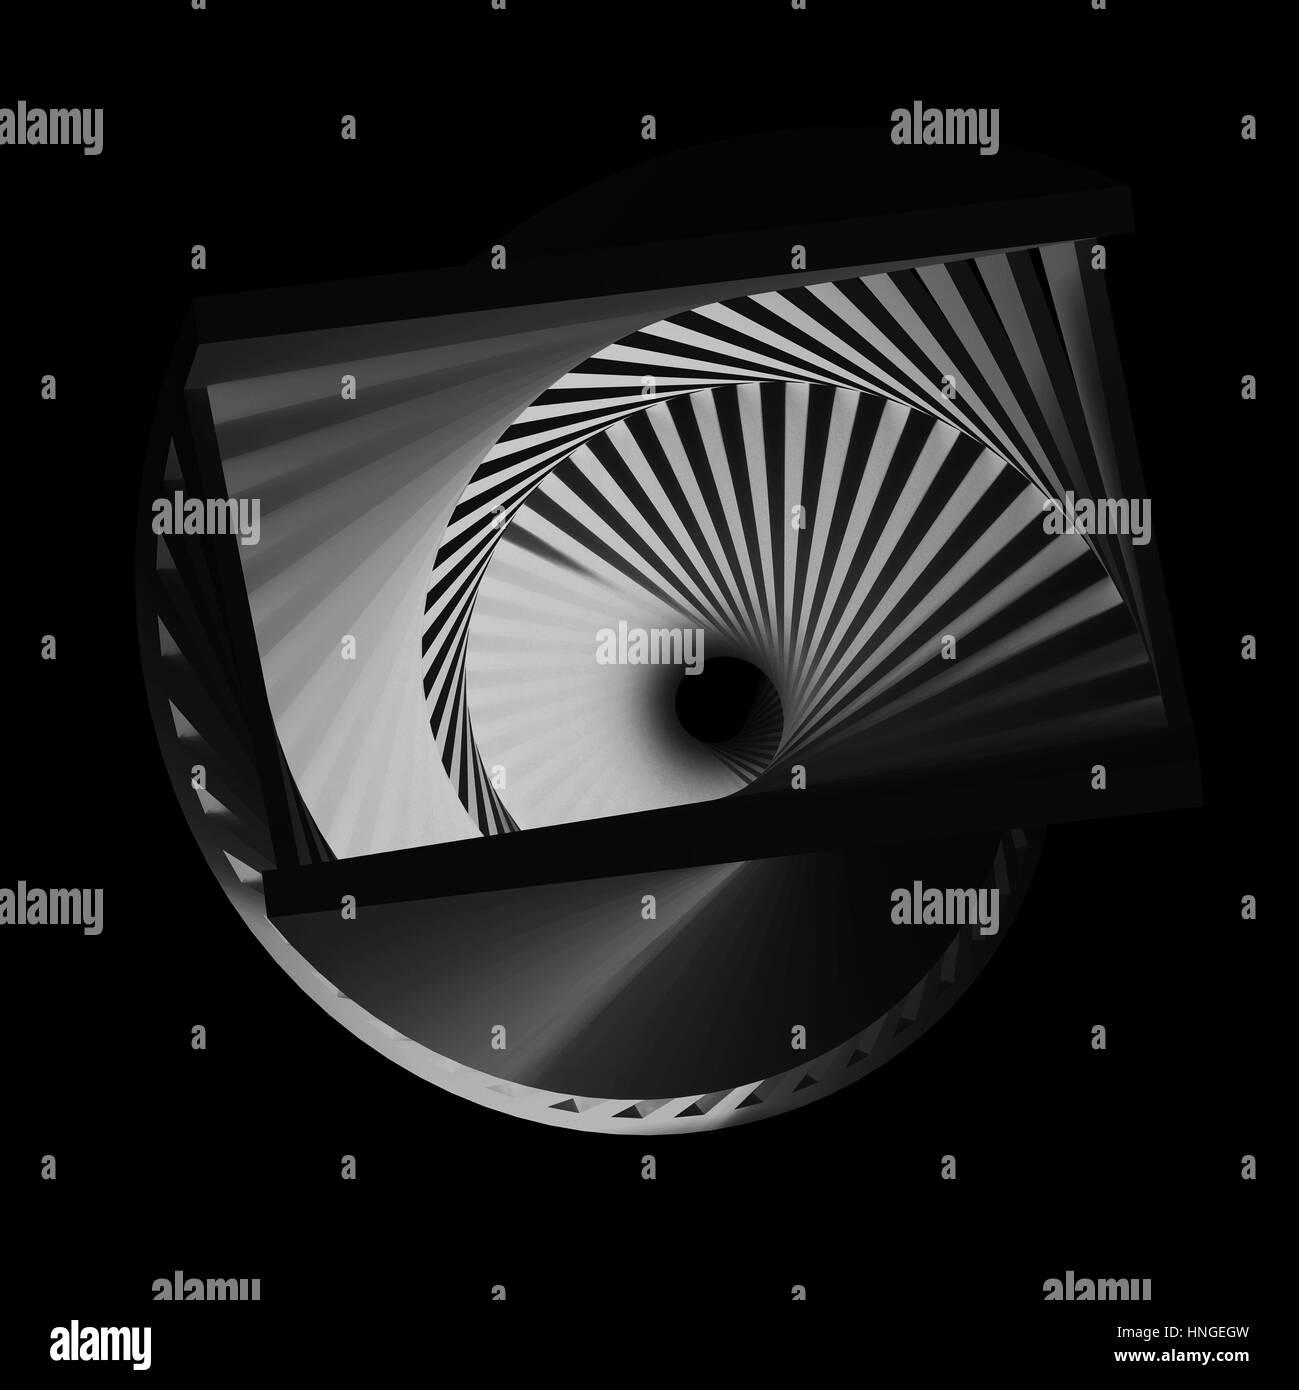 Abstrakte dunkle Spiralen Muster, cg optische Täuschung, 3d Render-illustration Stockfoto